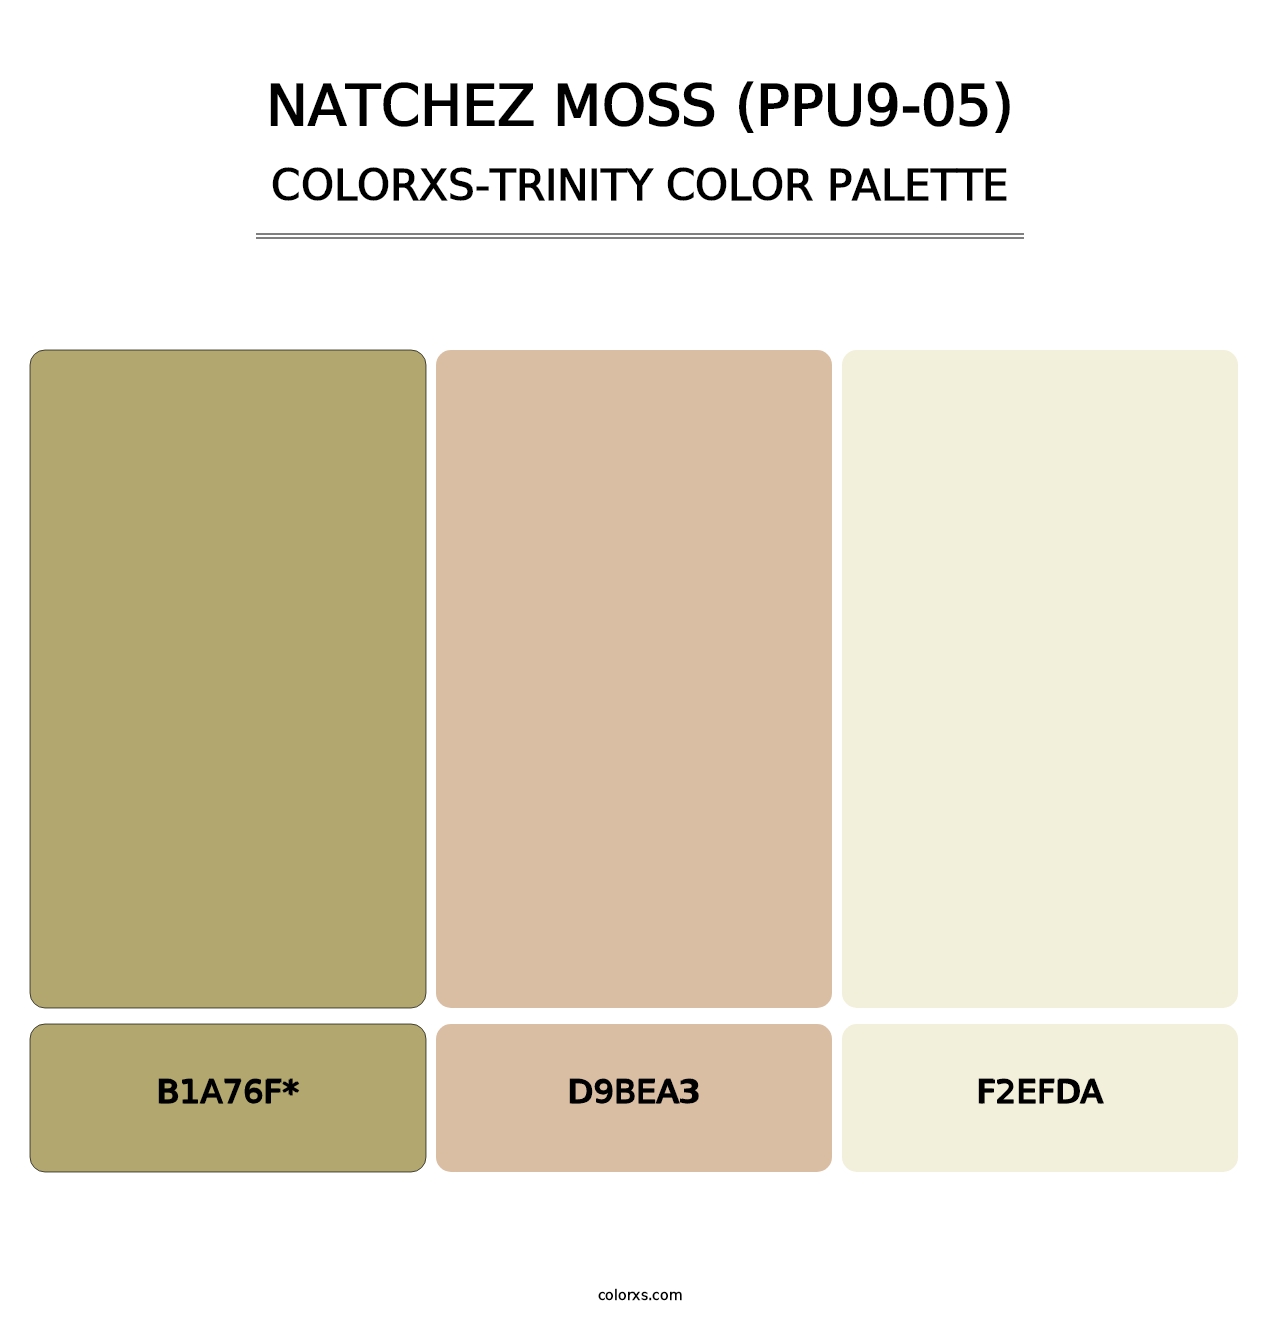 Natchez Moss (PPU9-05) - Colorxs Trinity Palette